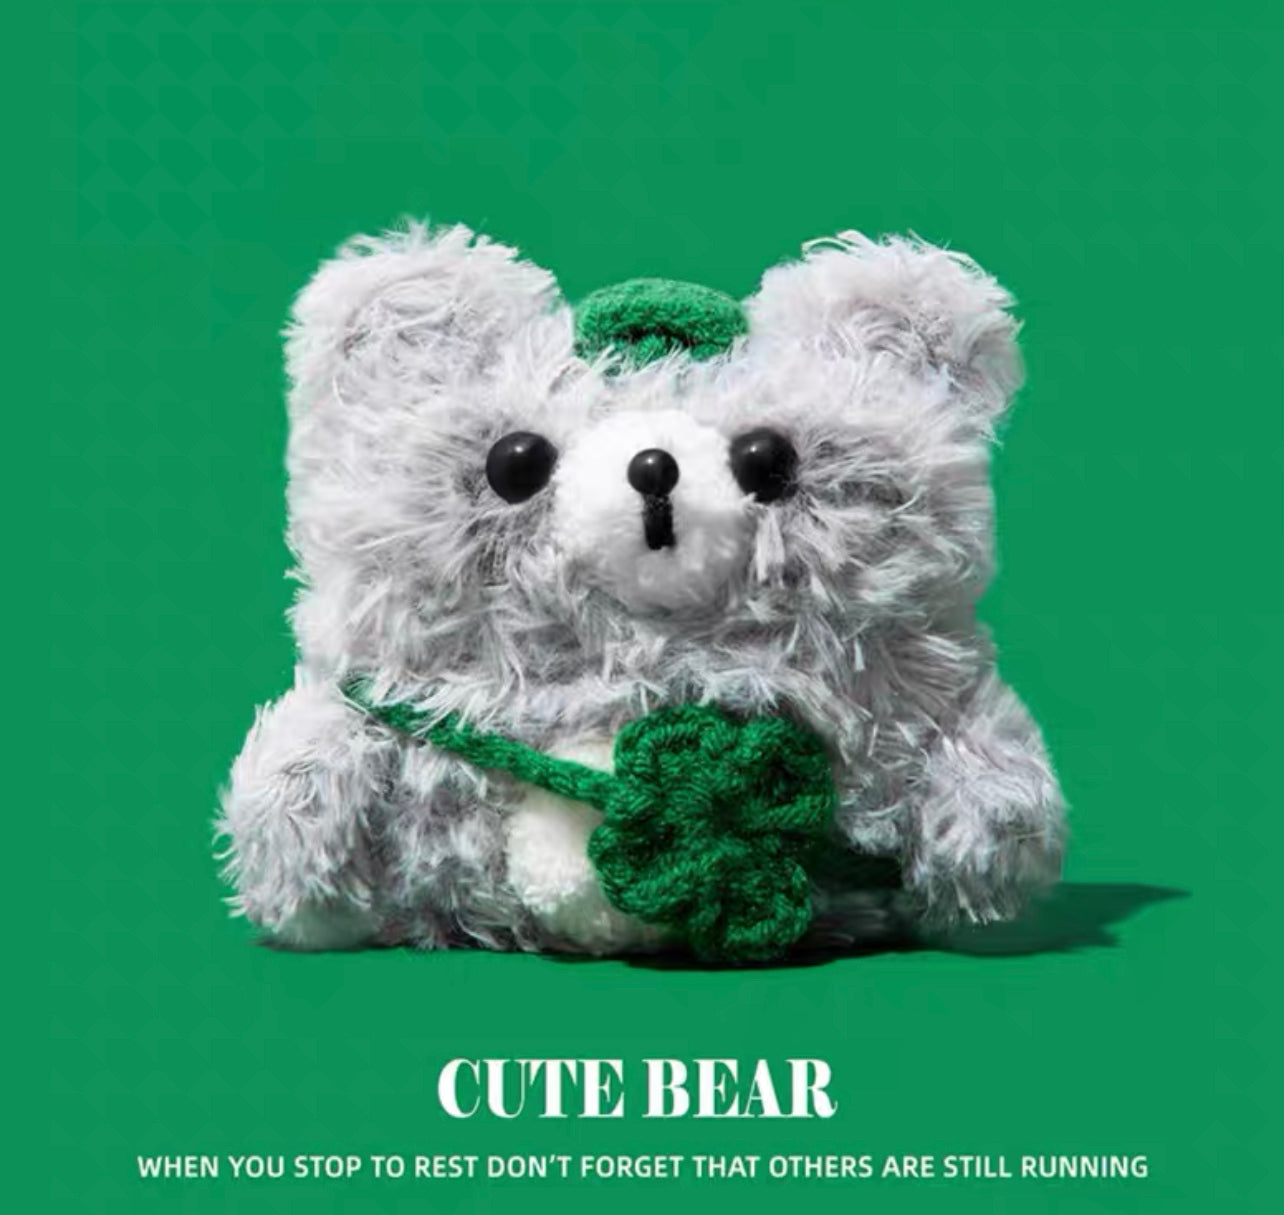 (Pre Order) Handmade Knitted Cute Green Bag Fluffy Bear AirPod Case